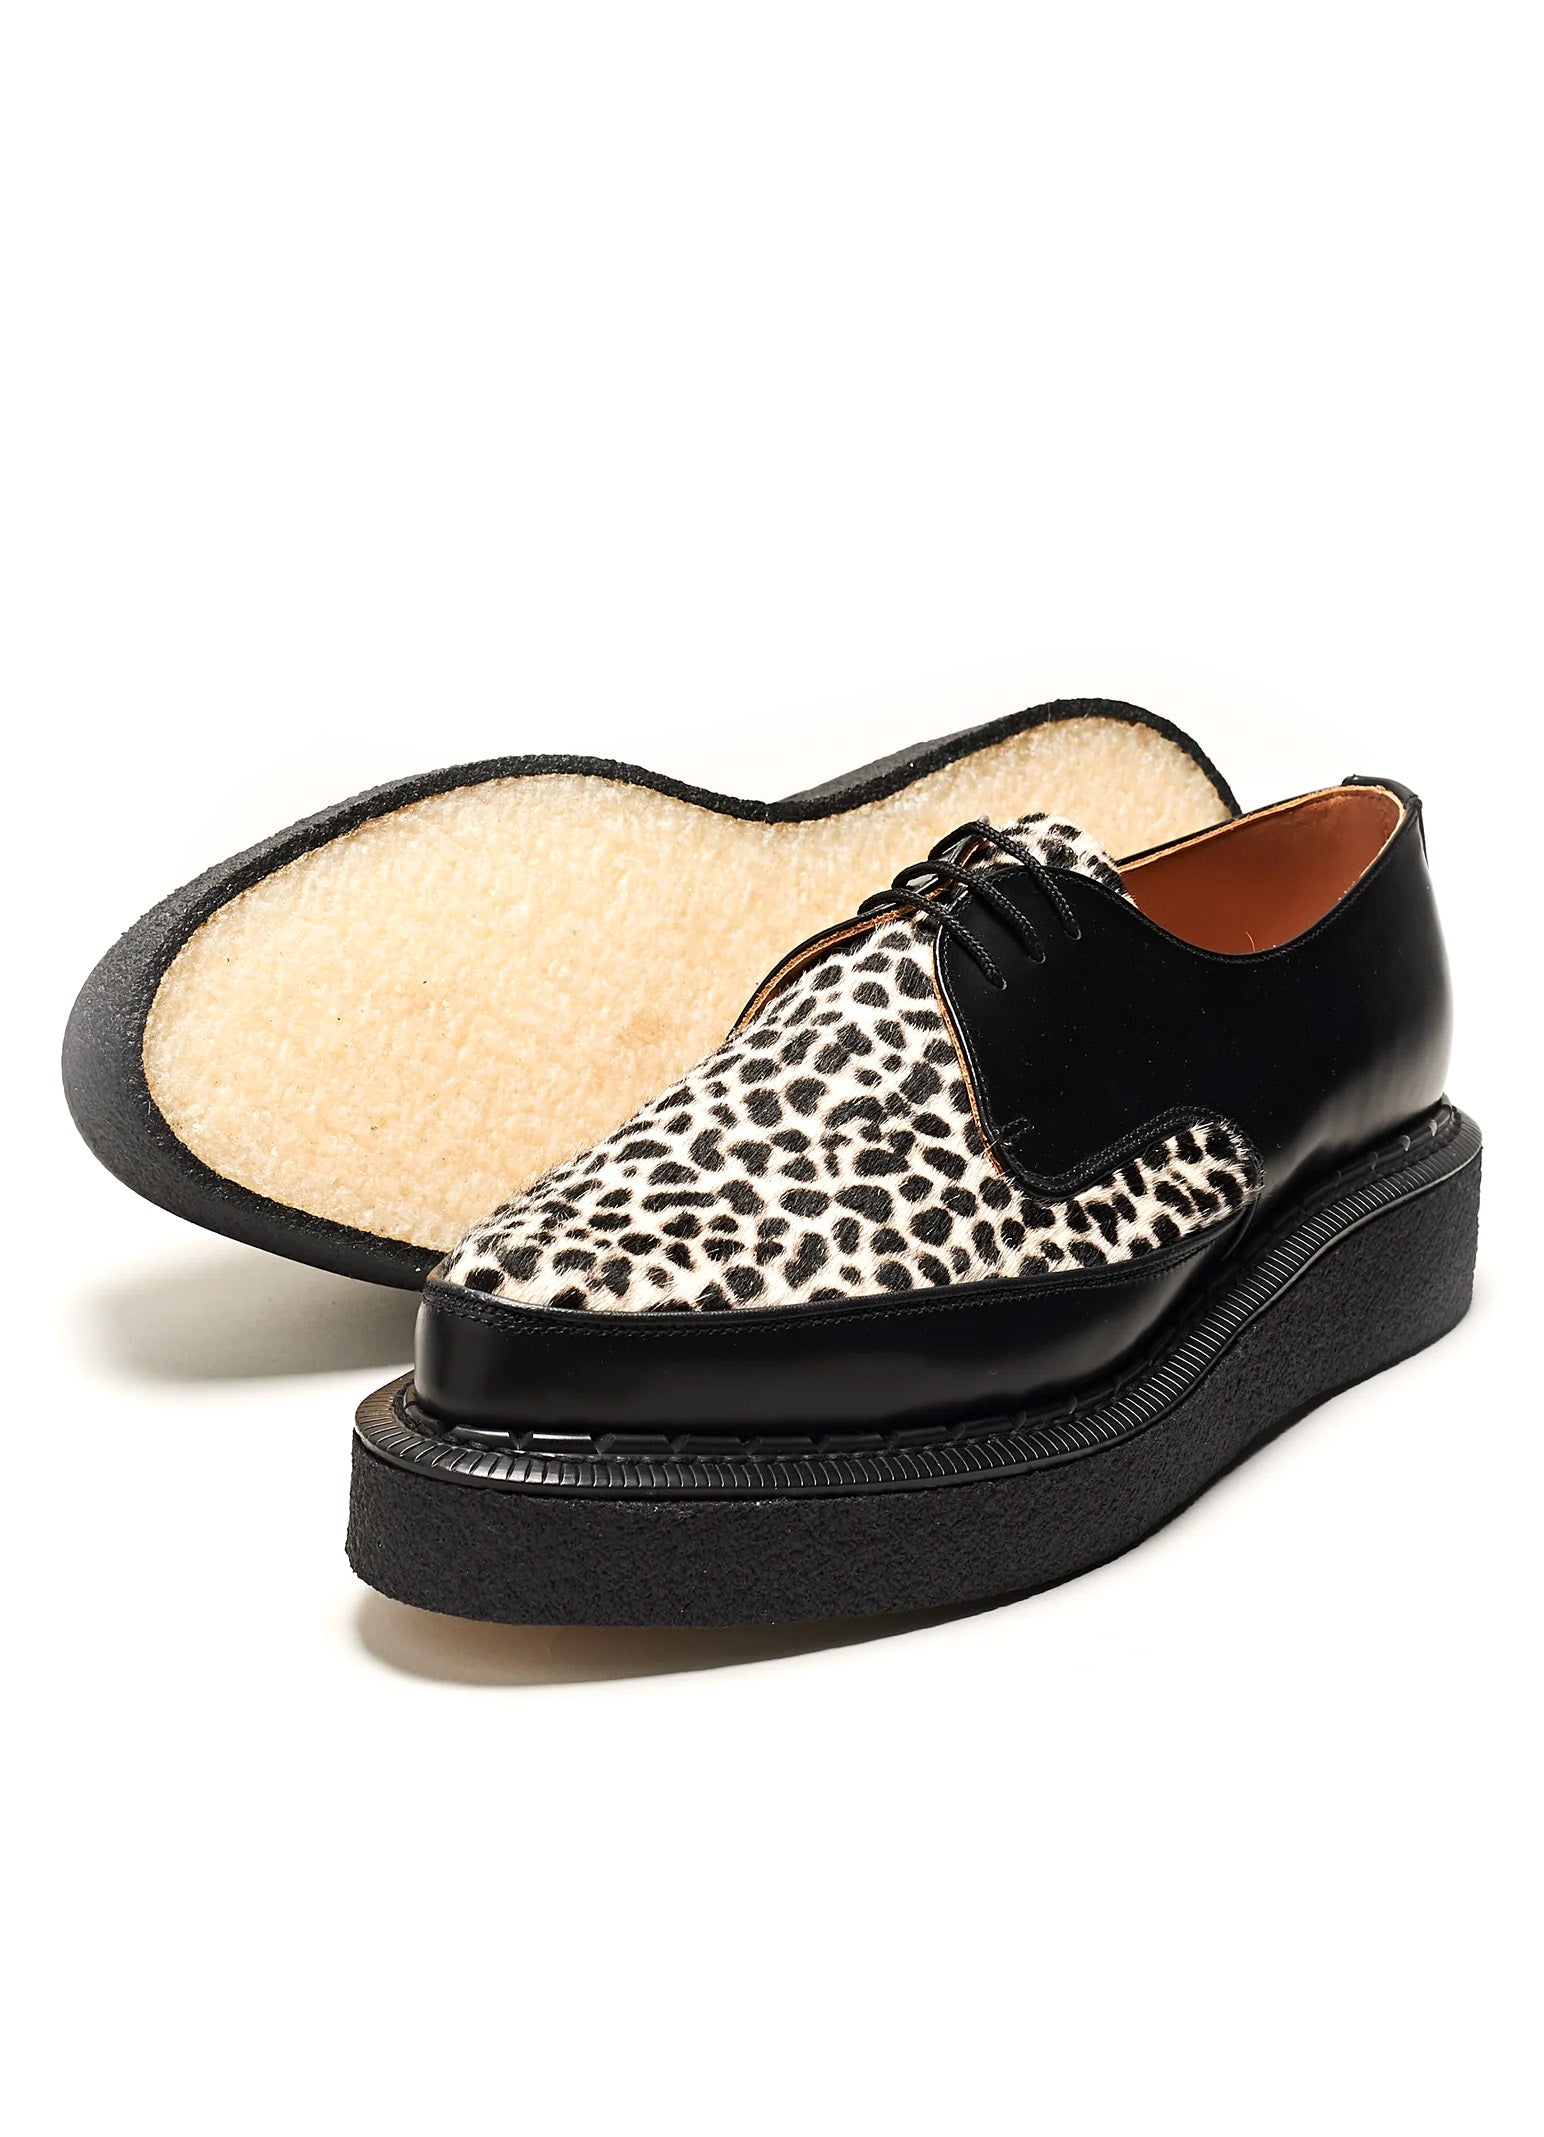 DIANO | Leather Shoe | Black/Leopard